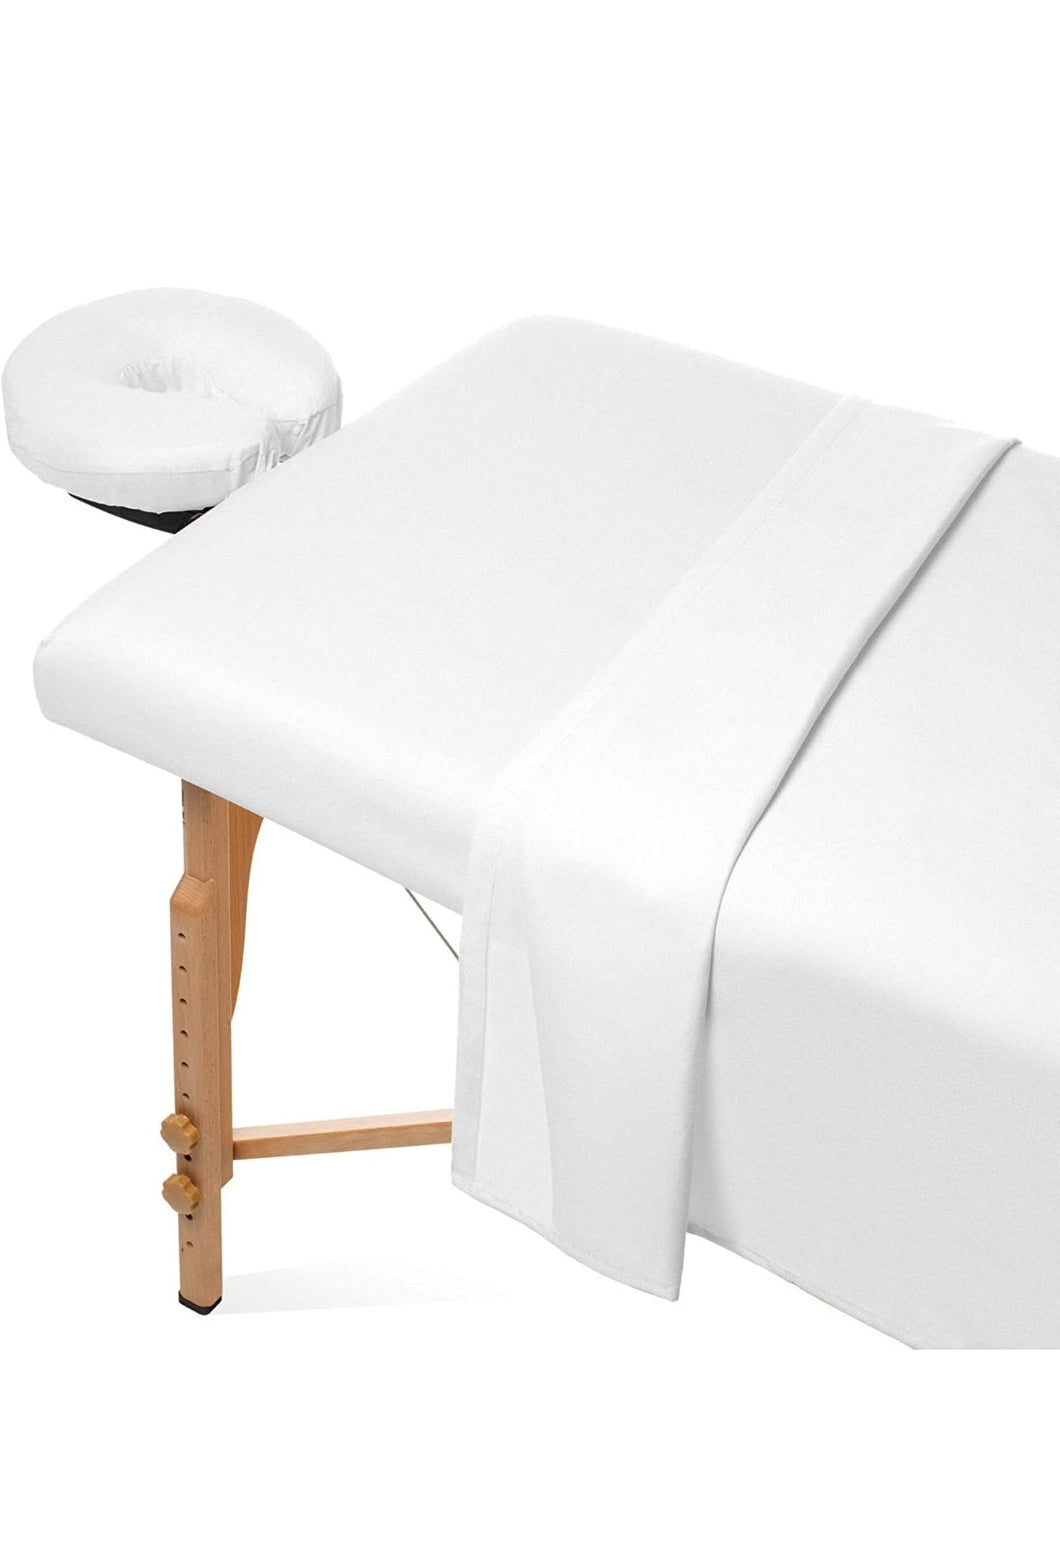 3pc Flannel Massage Bed Sheet Set (White)